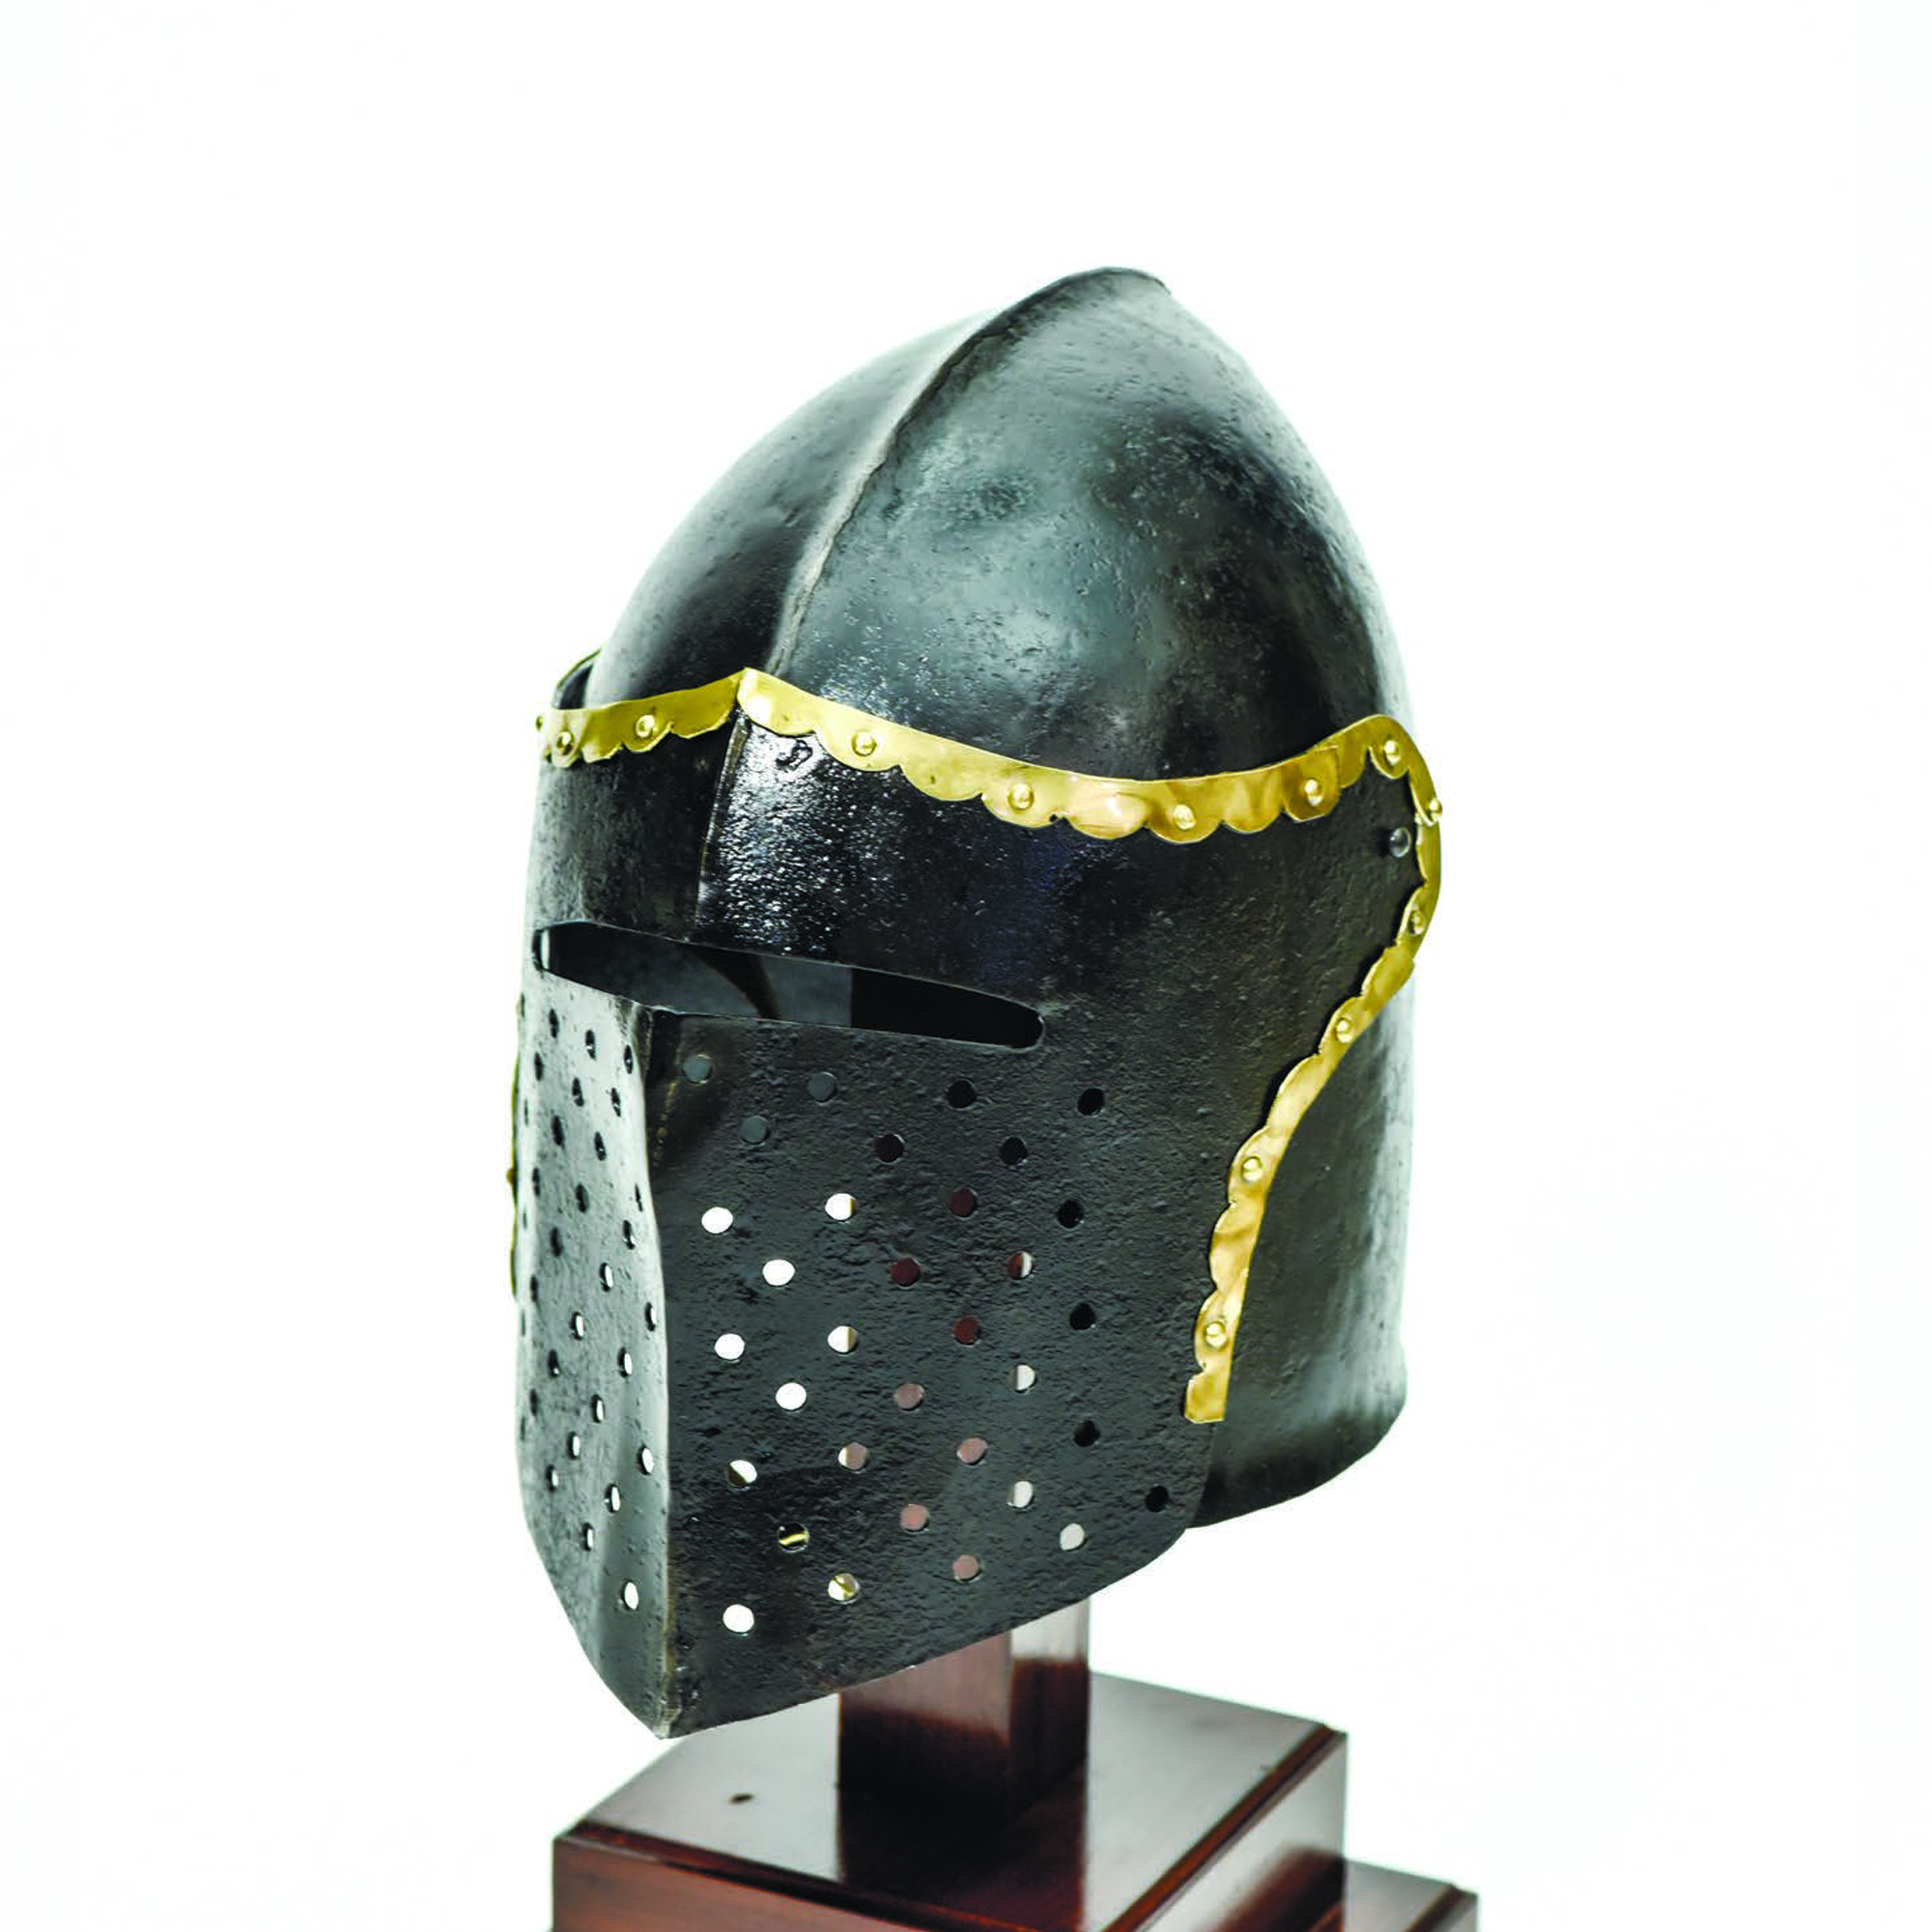 Armory Replicas ? The Cursed Black Knight Functional Medieval HELMET Armor